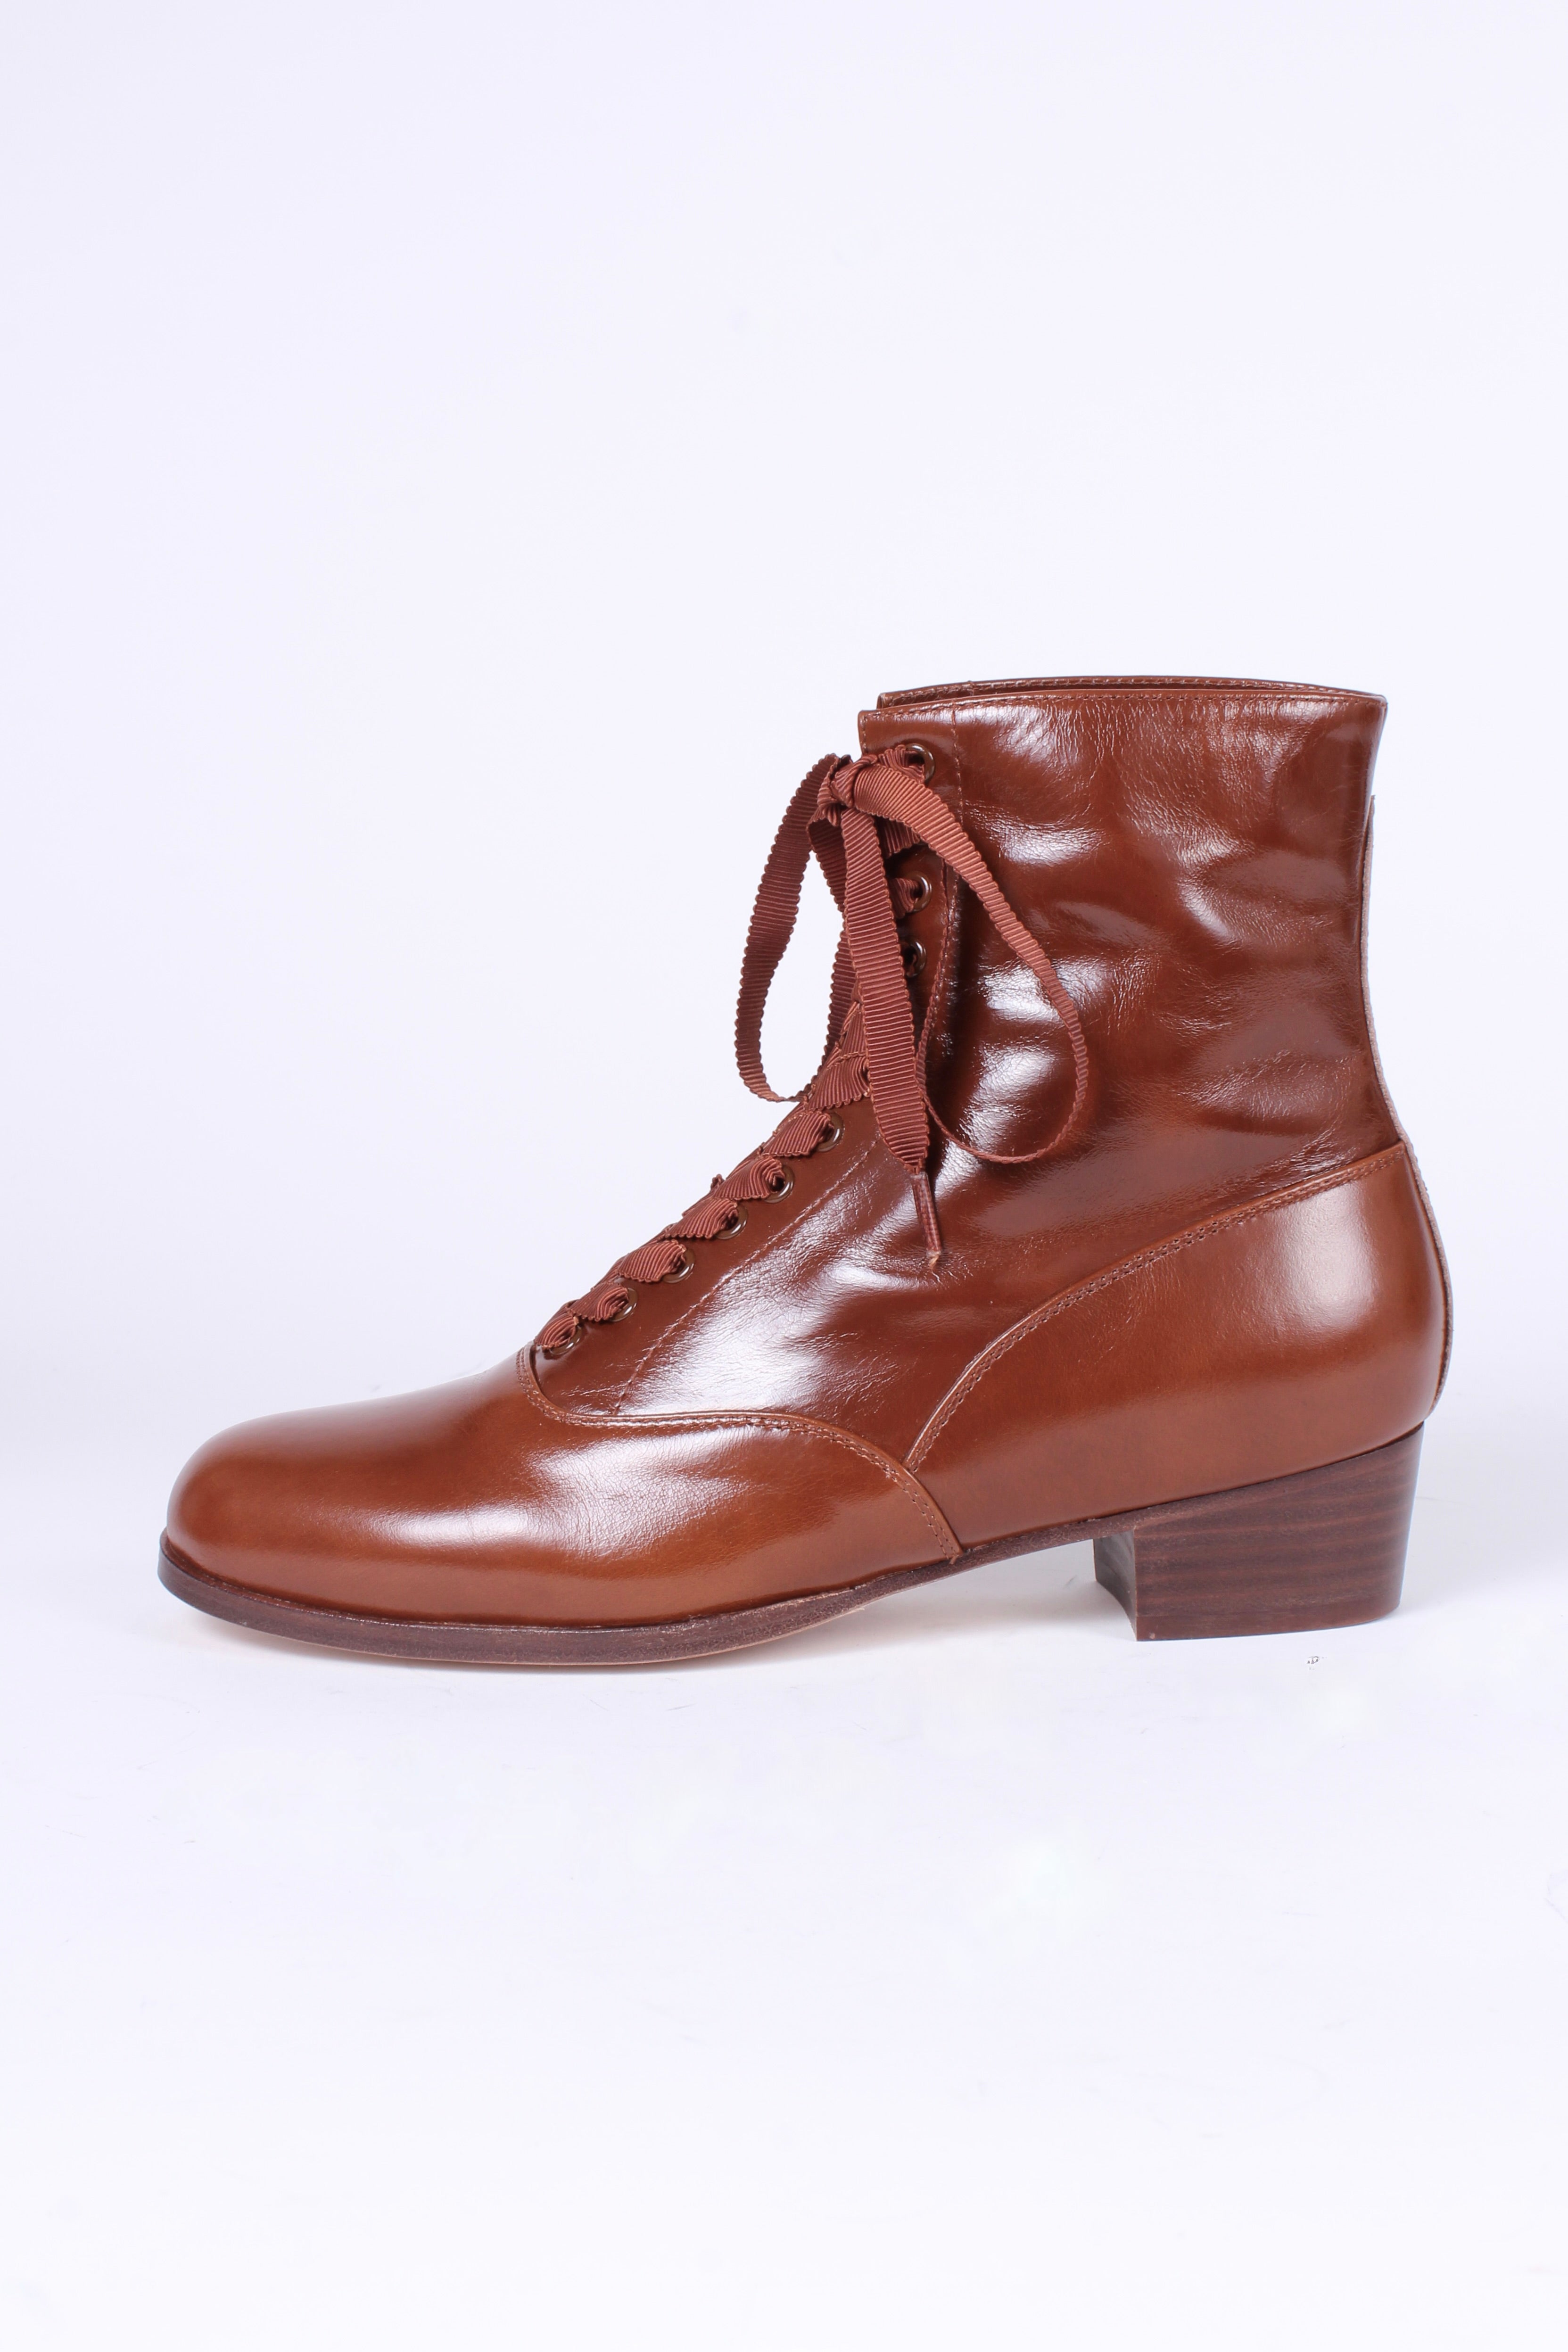 1920'er / 1930'er vintage style støvler - Brun - Britta